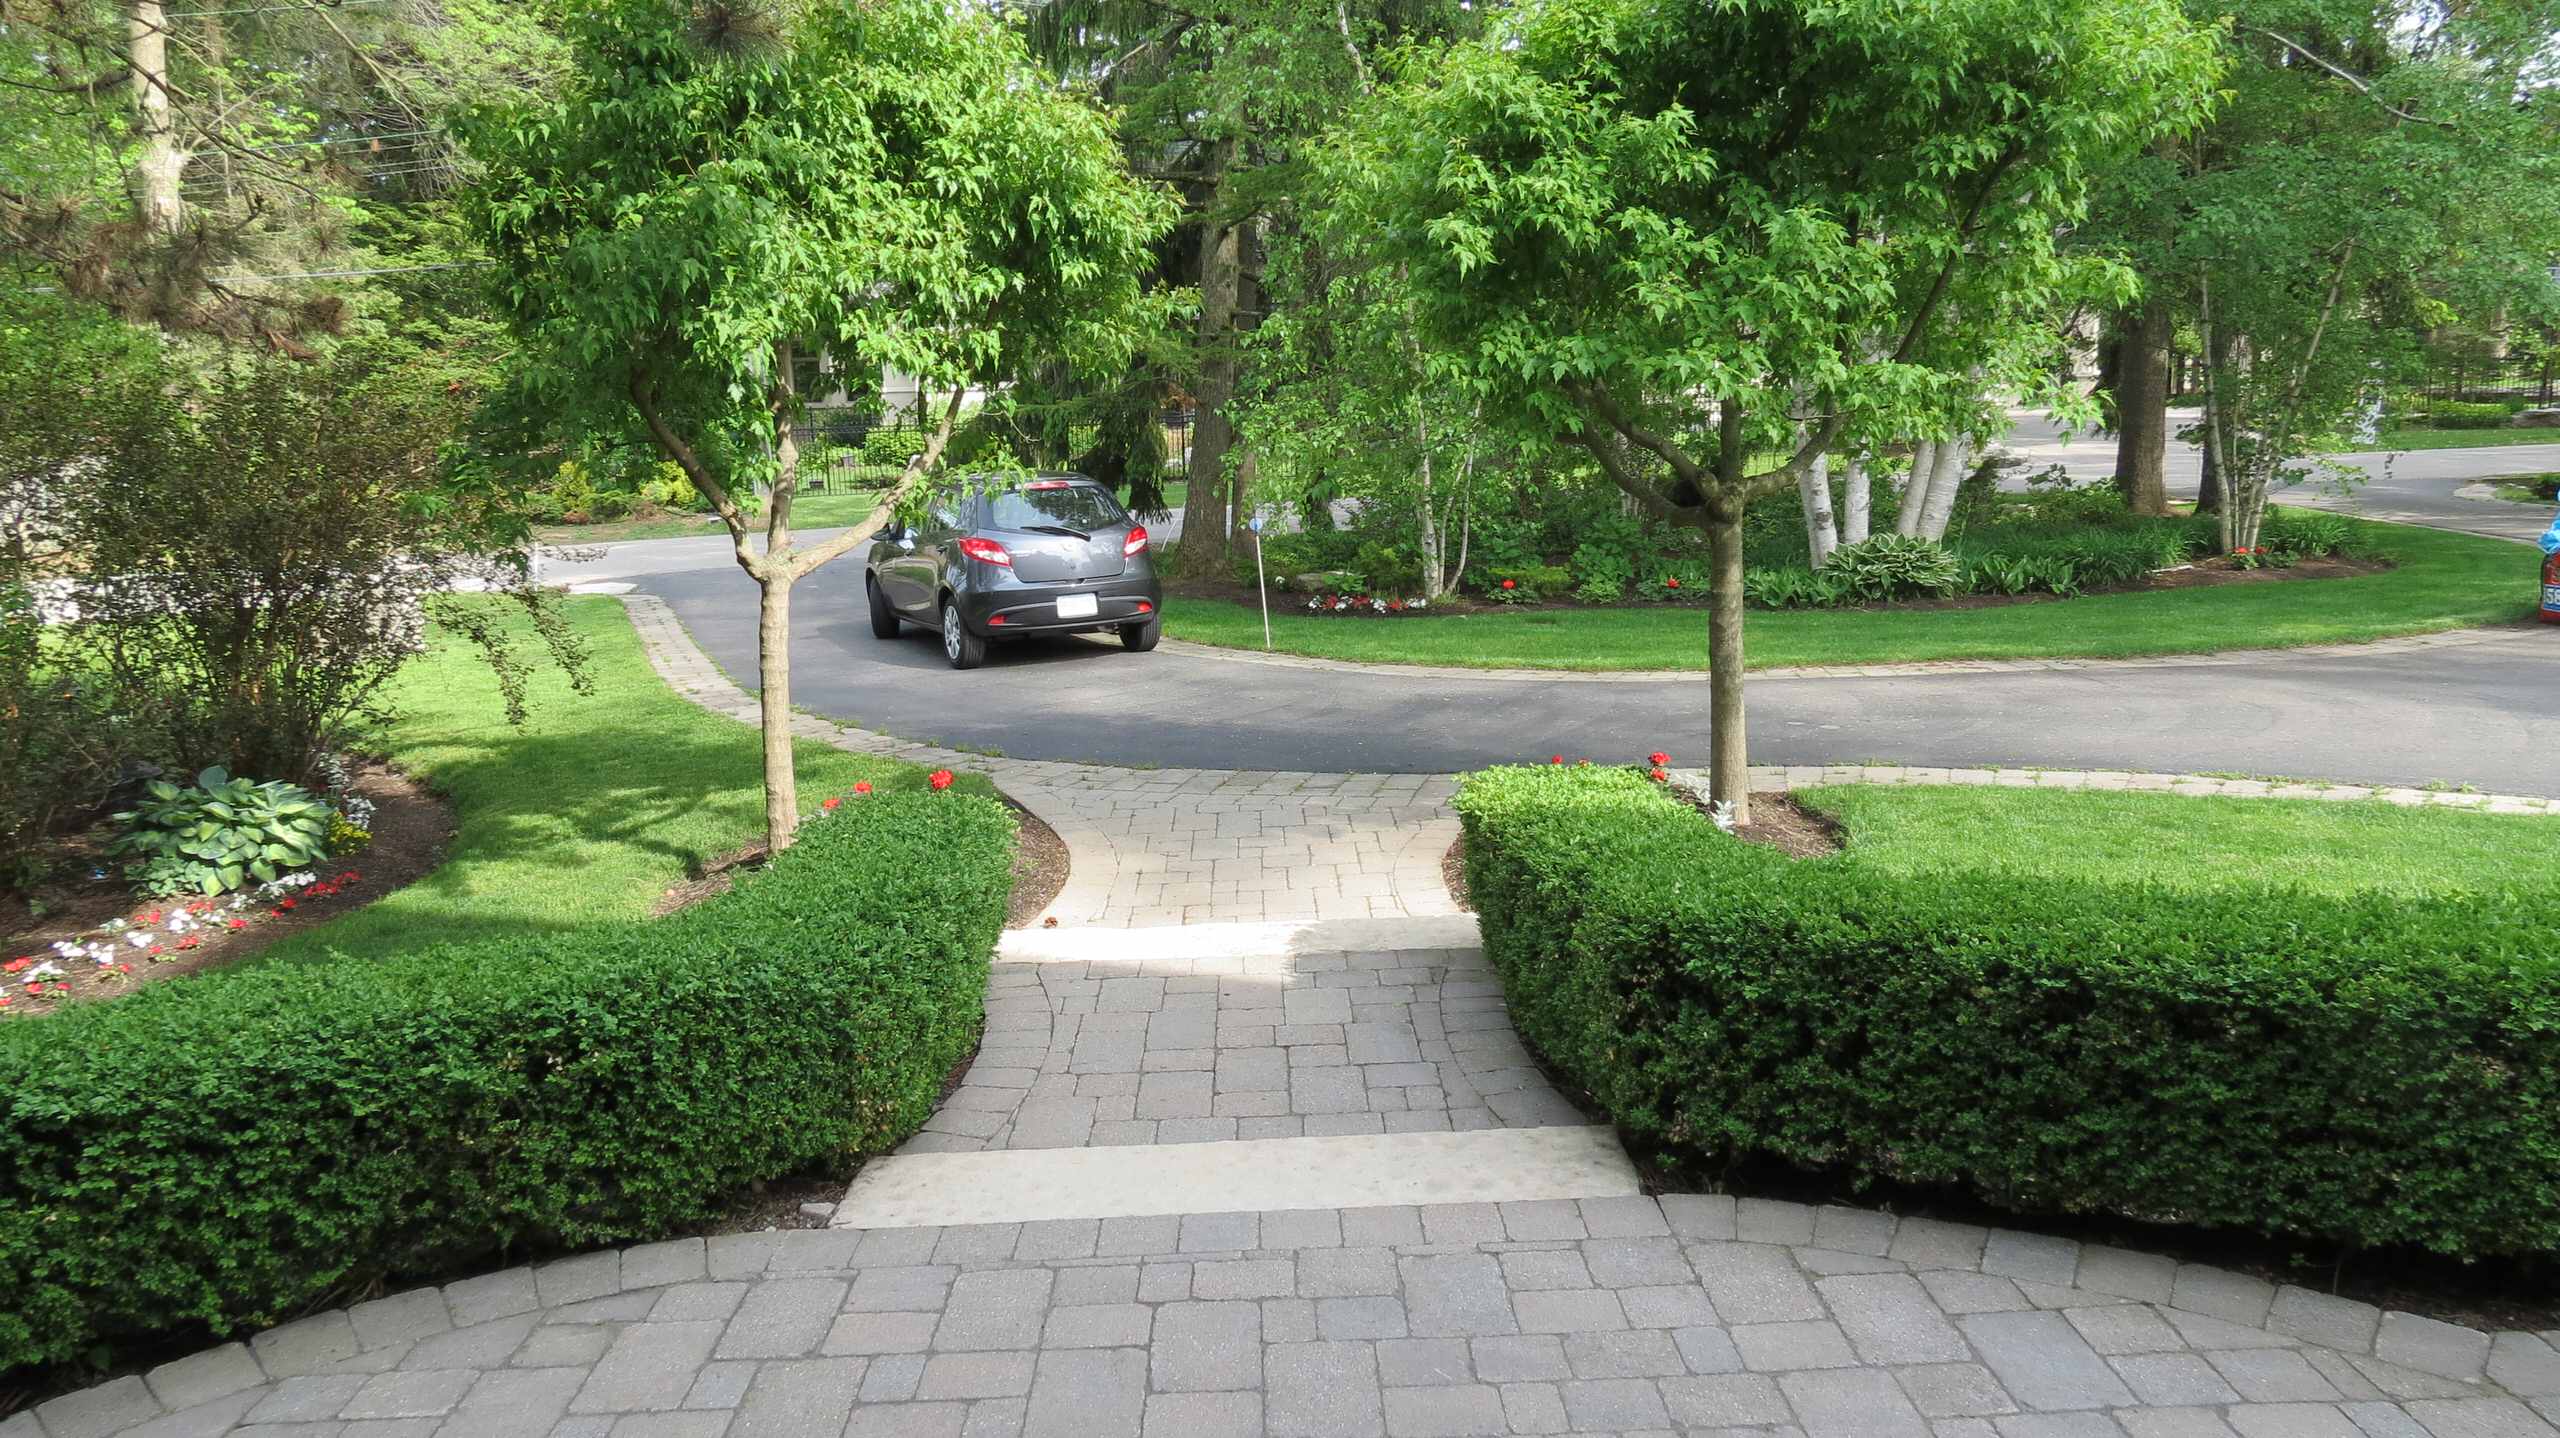 Formal hedges/ semi circle driveway